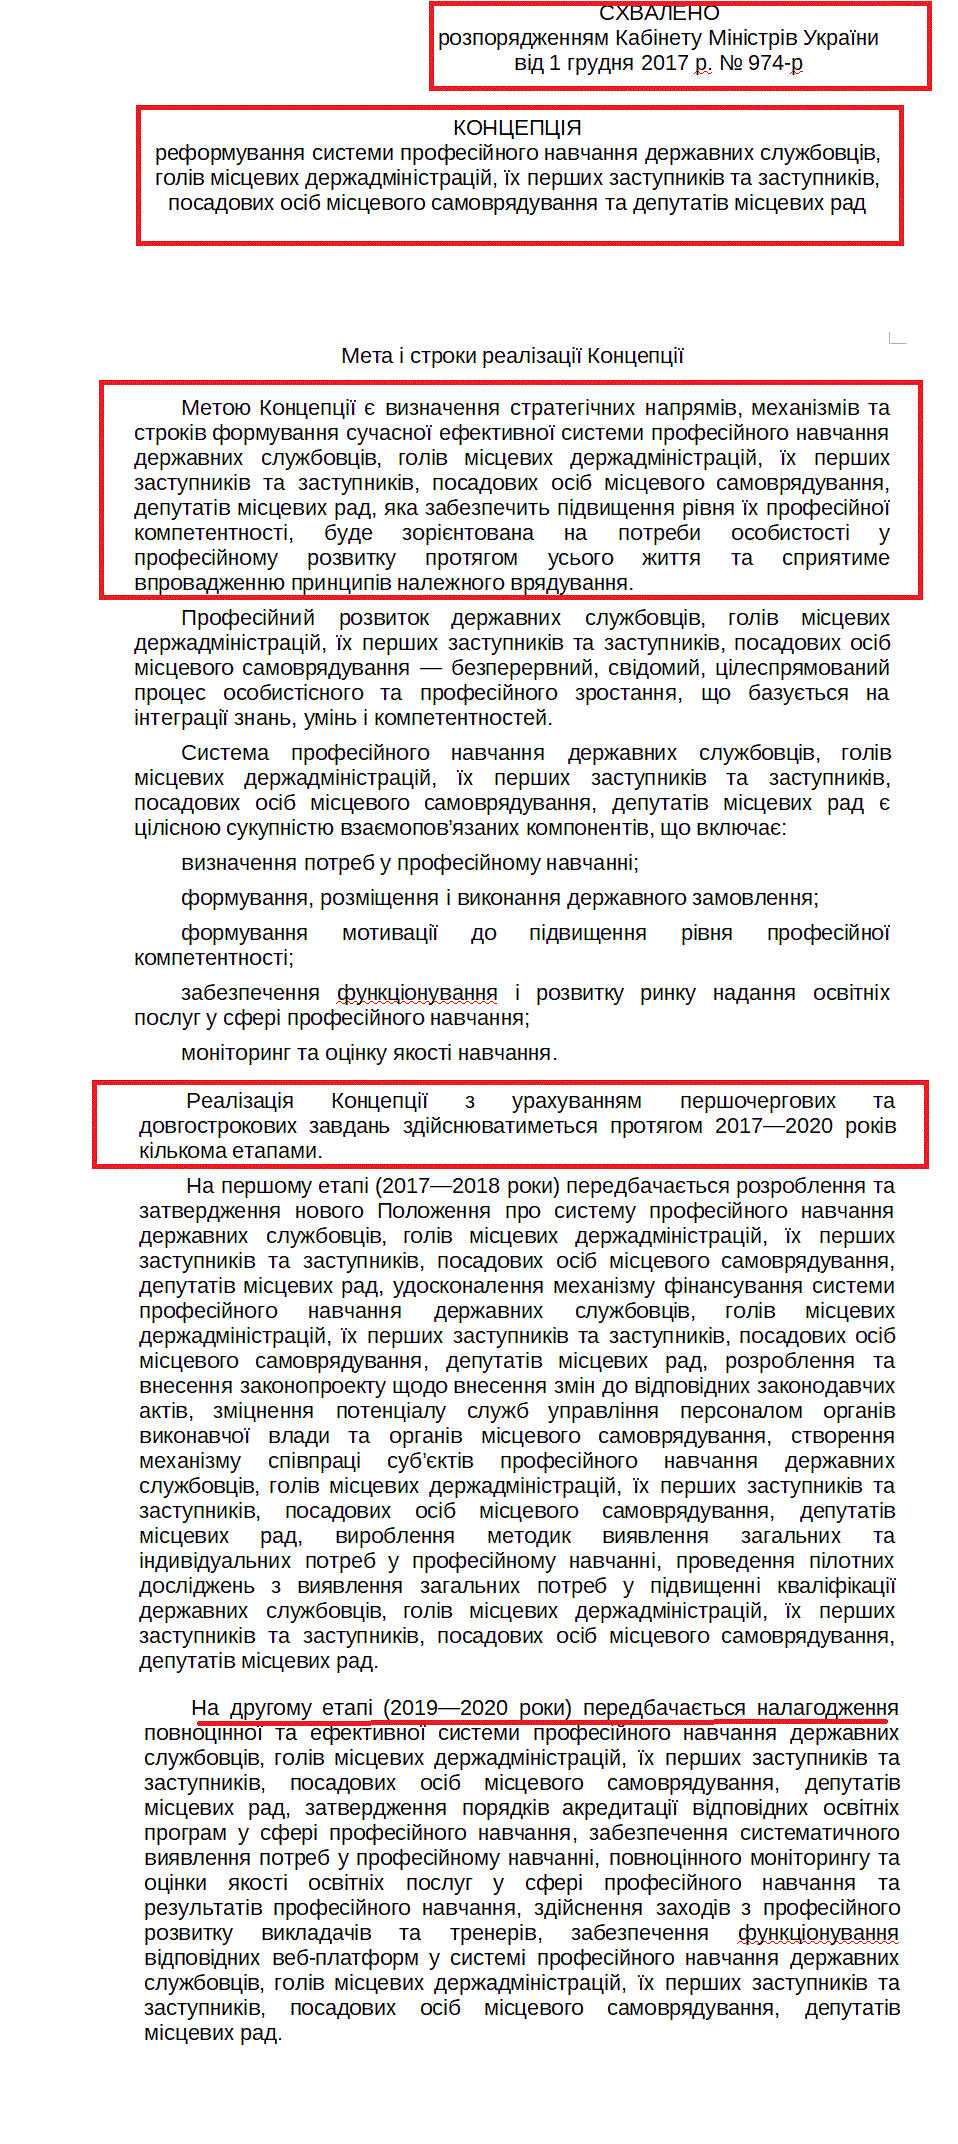 https://www.kmu.gov.ua/ua/npas/pro-shvalennya-koncepciy